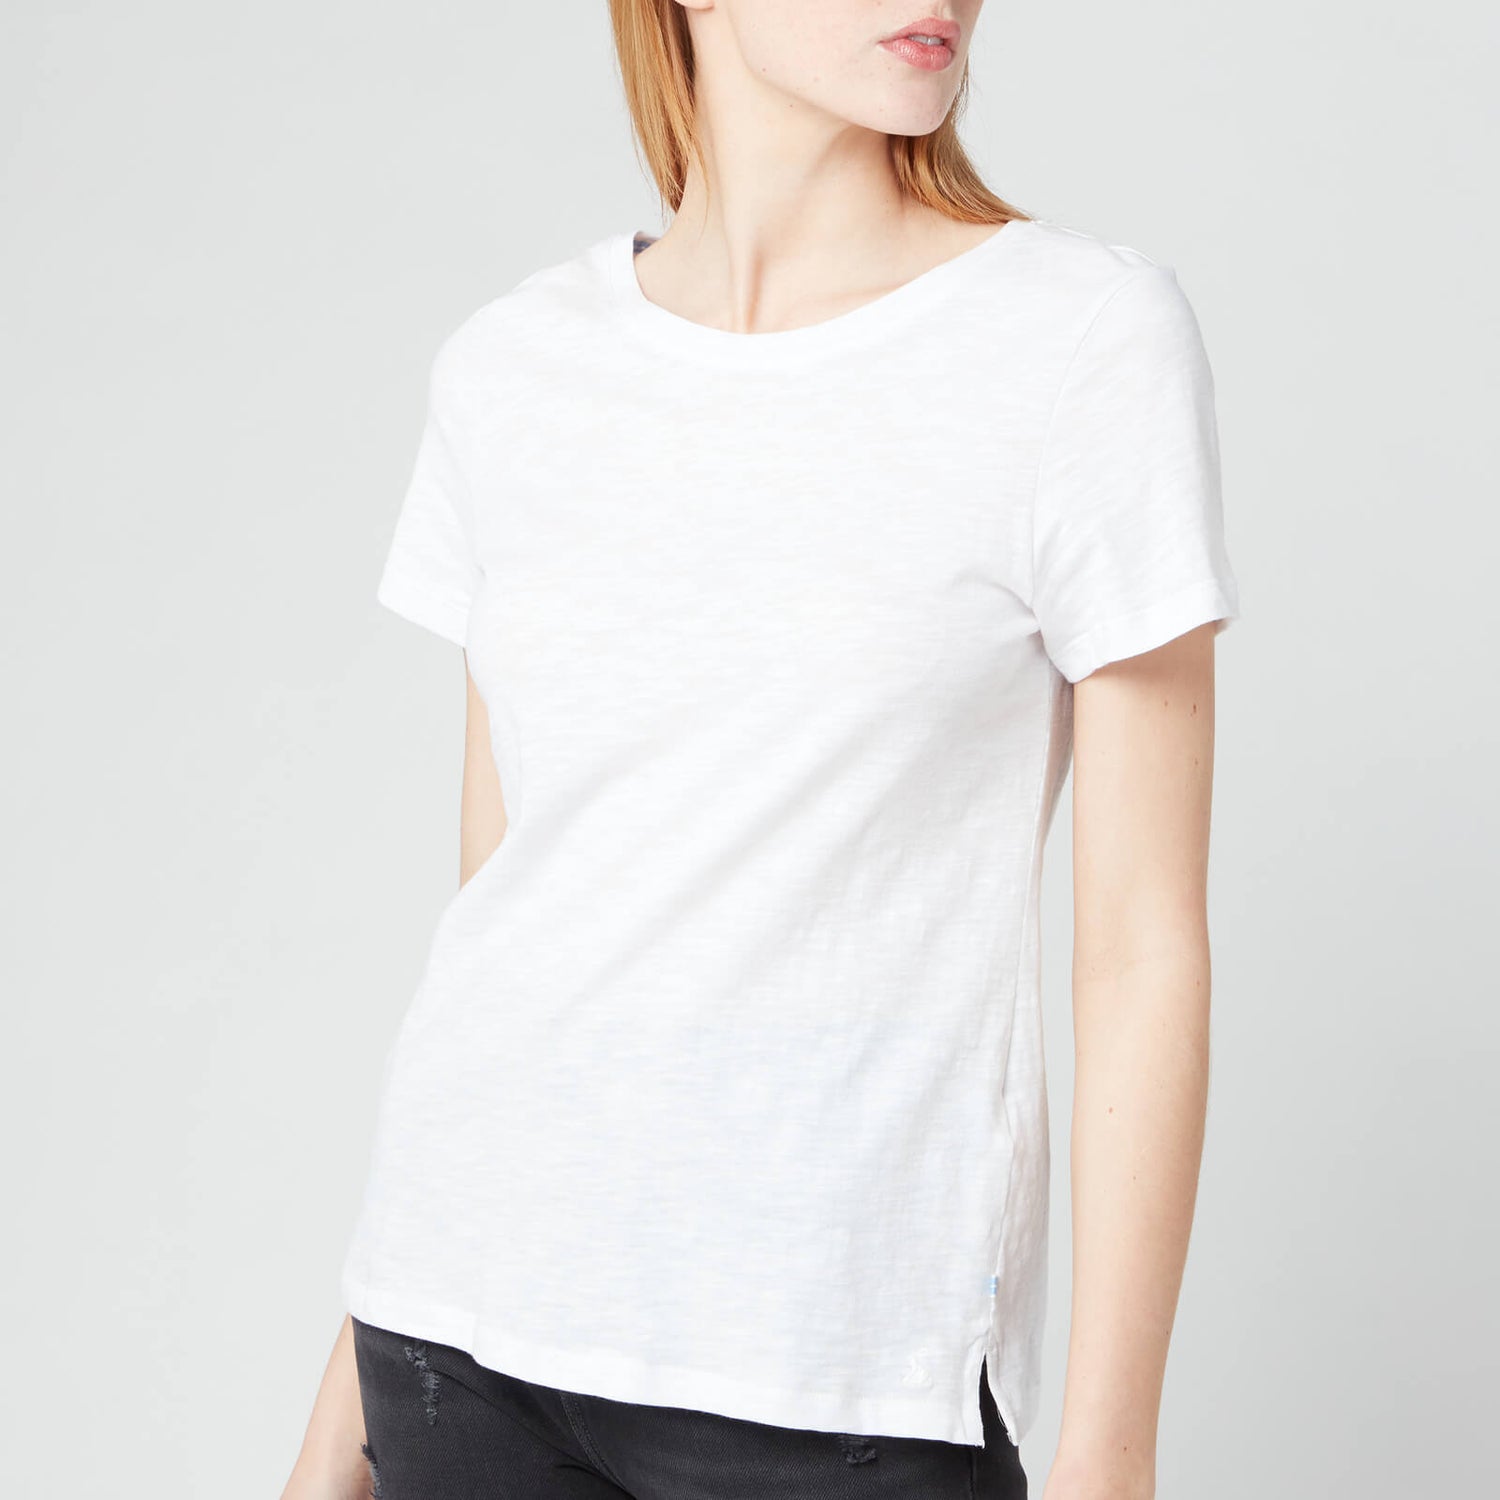 Joules Women's Carley Solid T-Shirt - Bright White | TheHut.com